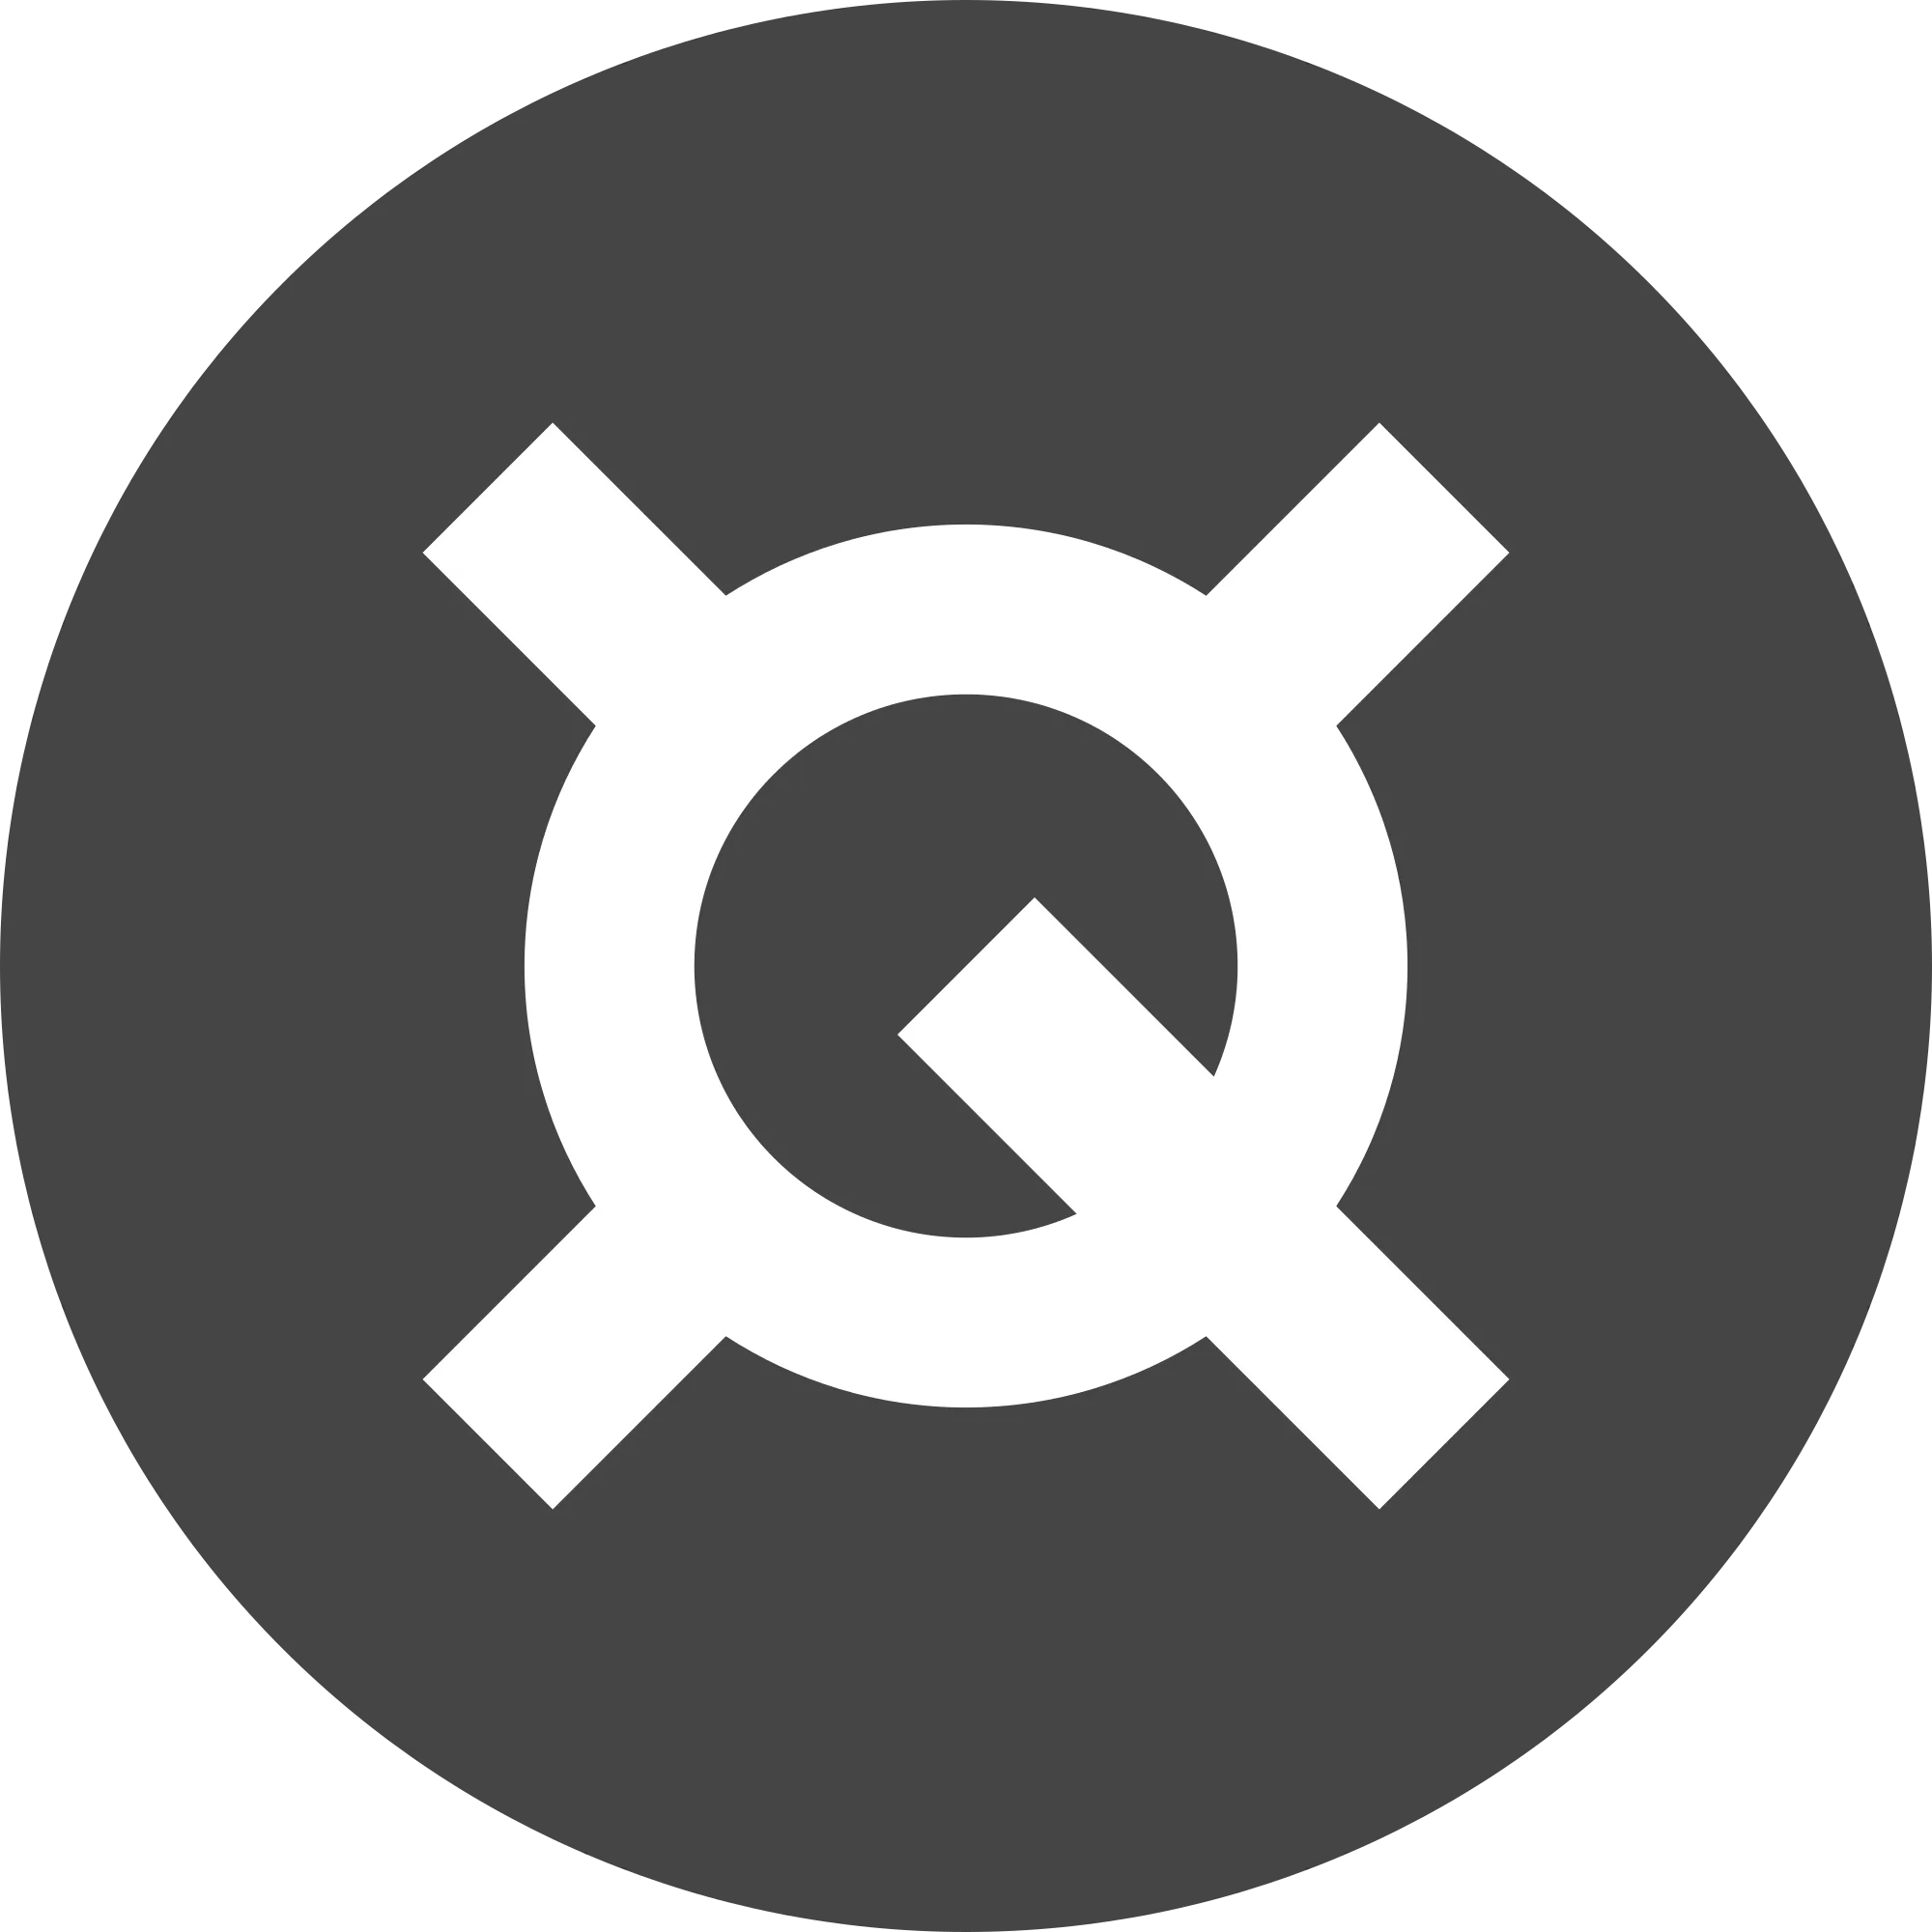 Quantstamp logo in png format